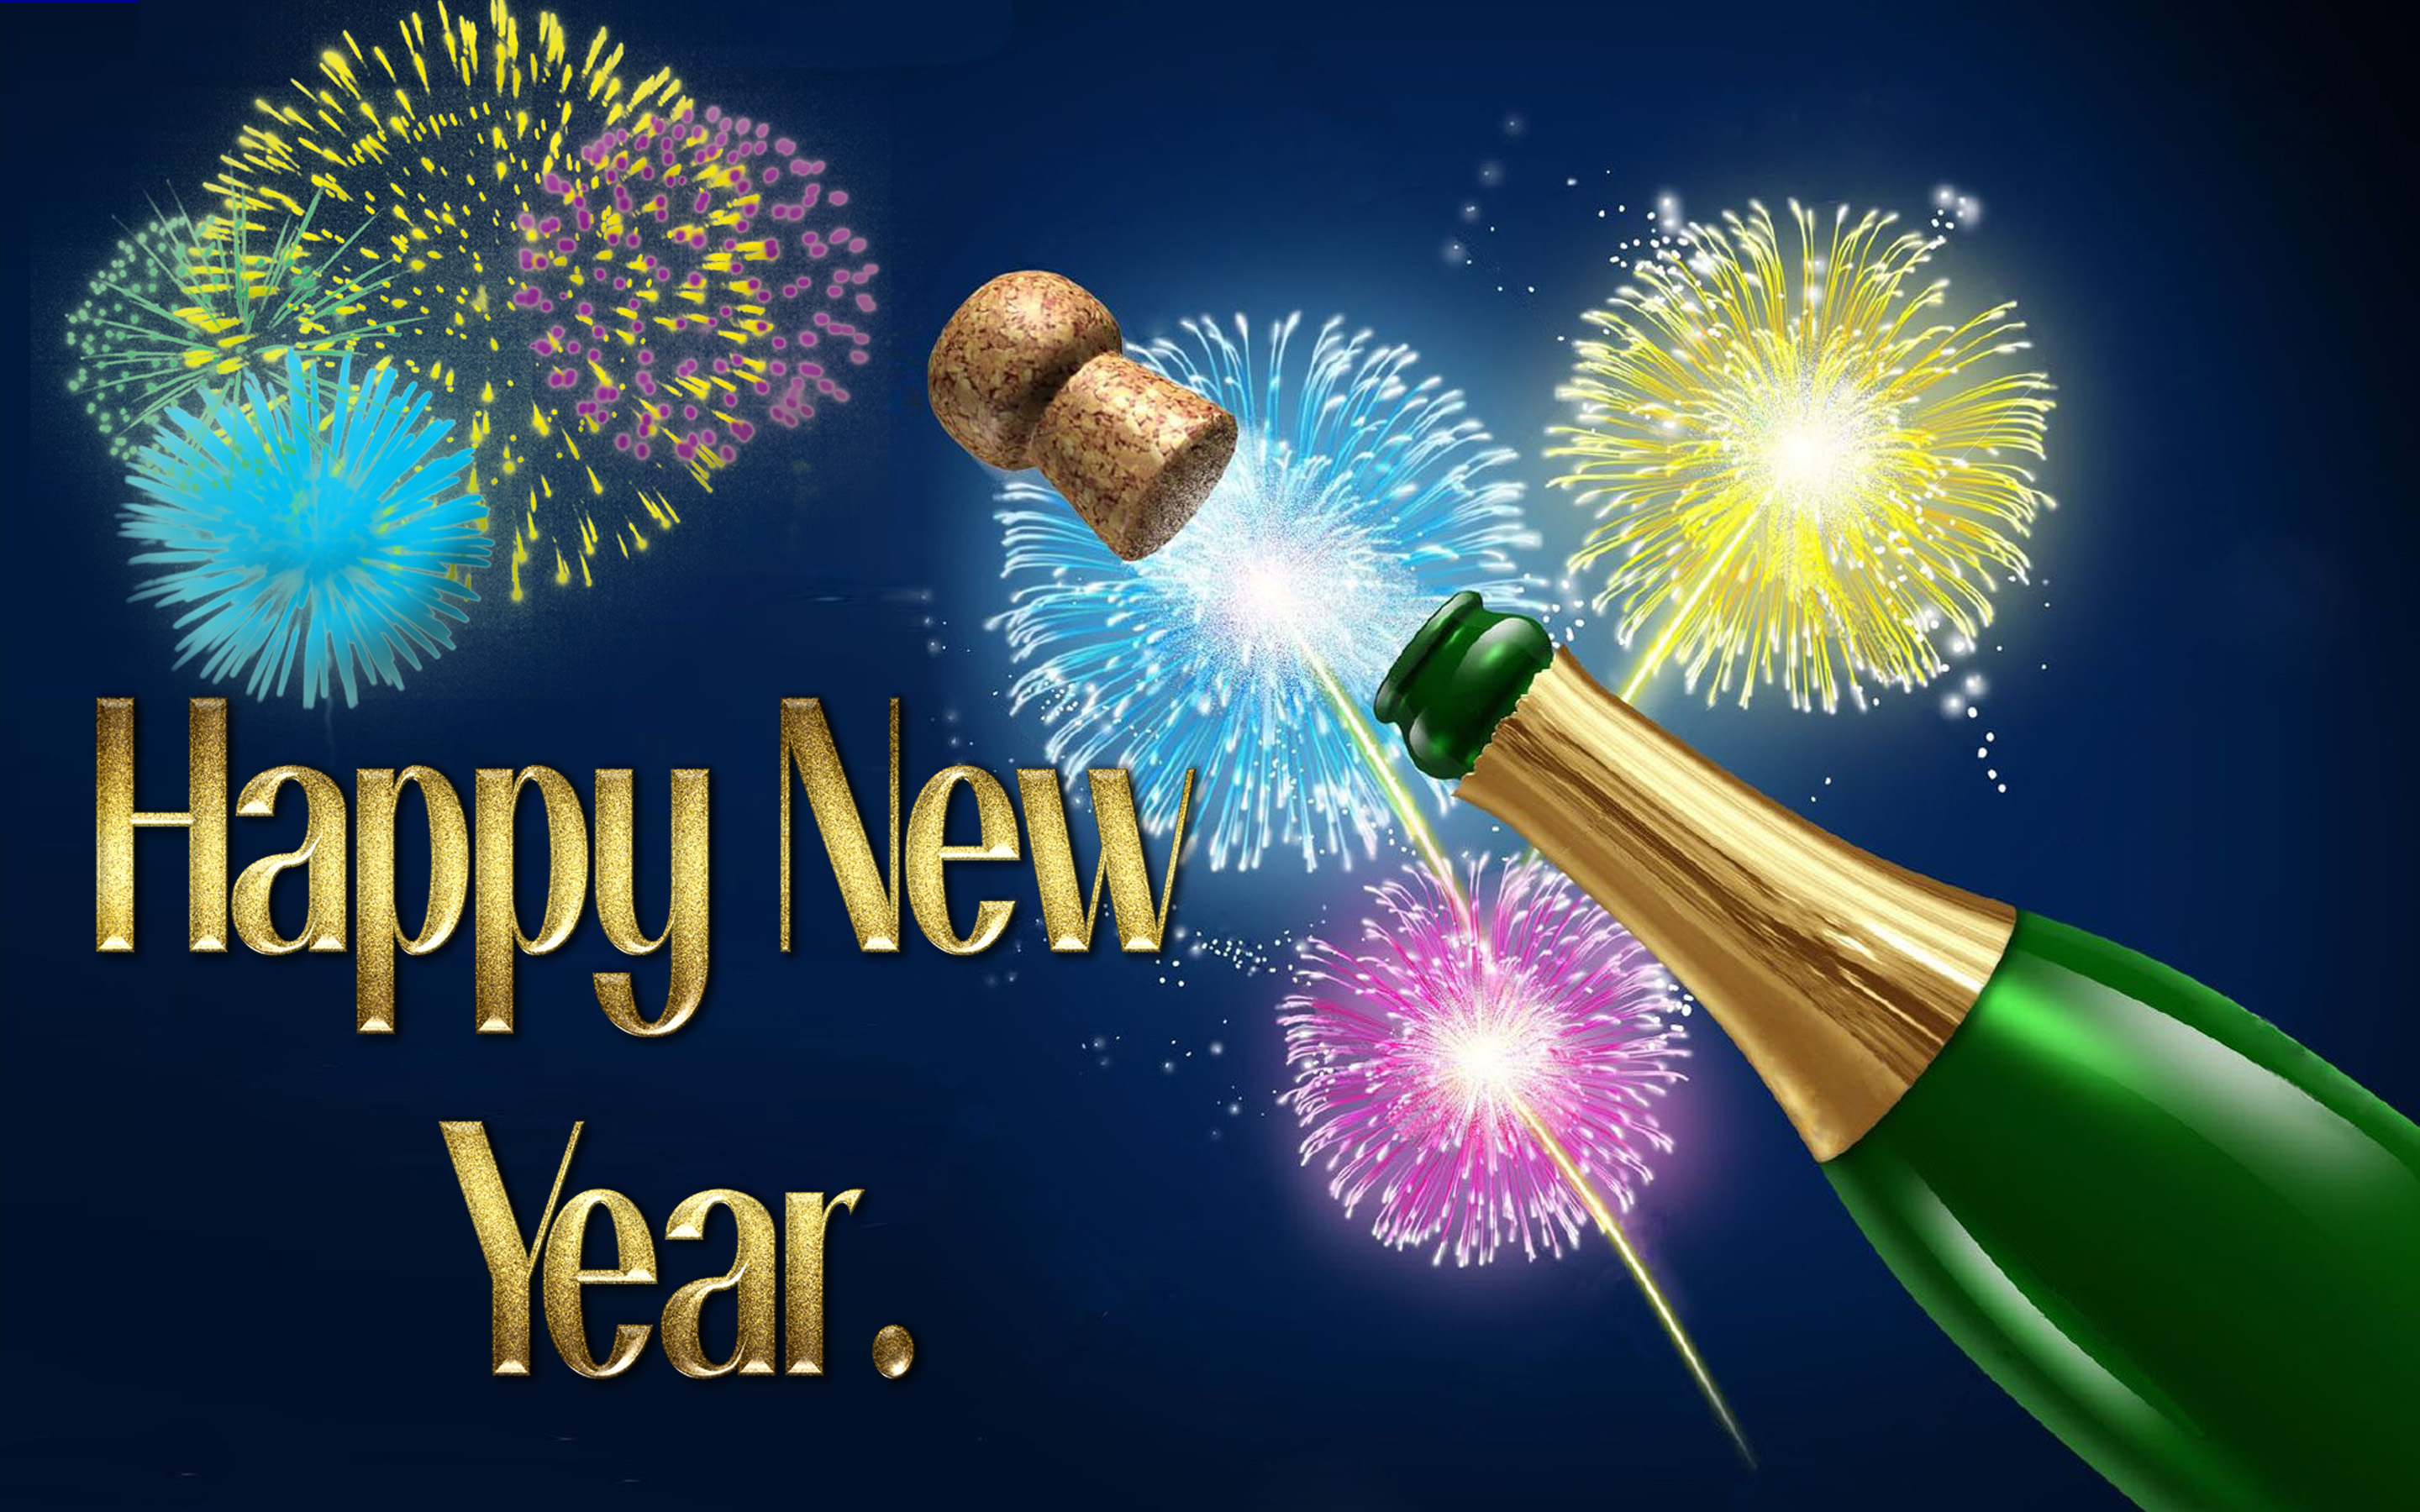 New years special. Шампанское фейерверк. Happy New year картинки. Фейерверк с шампанским. Happy New year обои на рабочий стол.